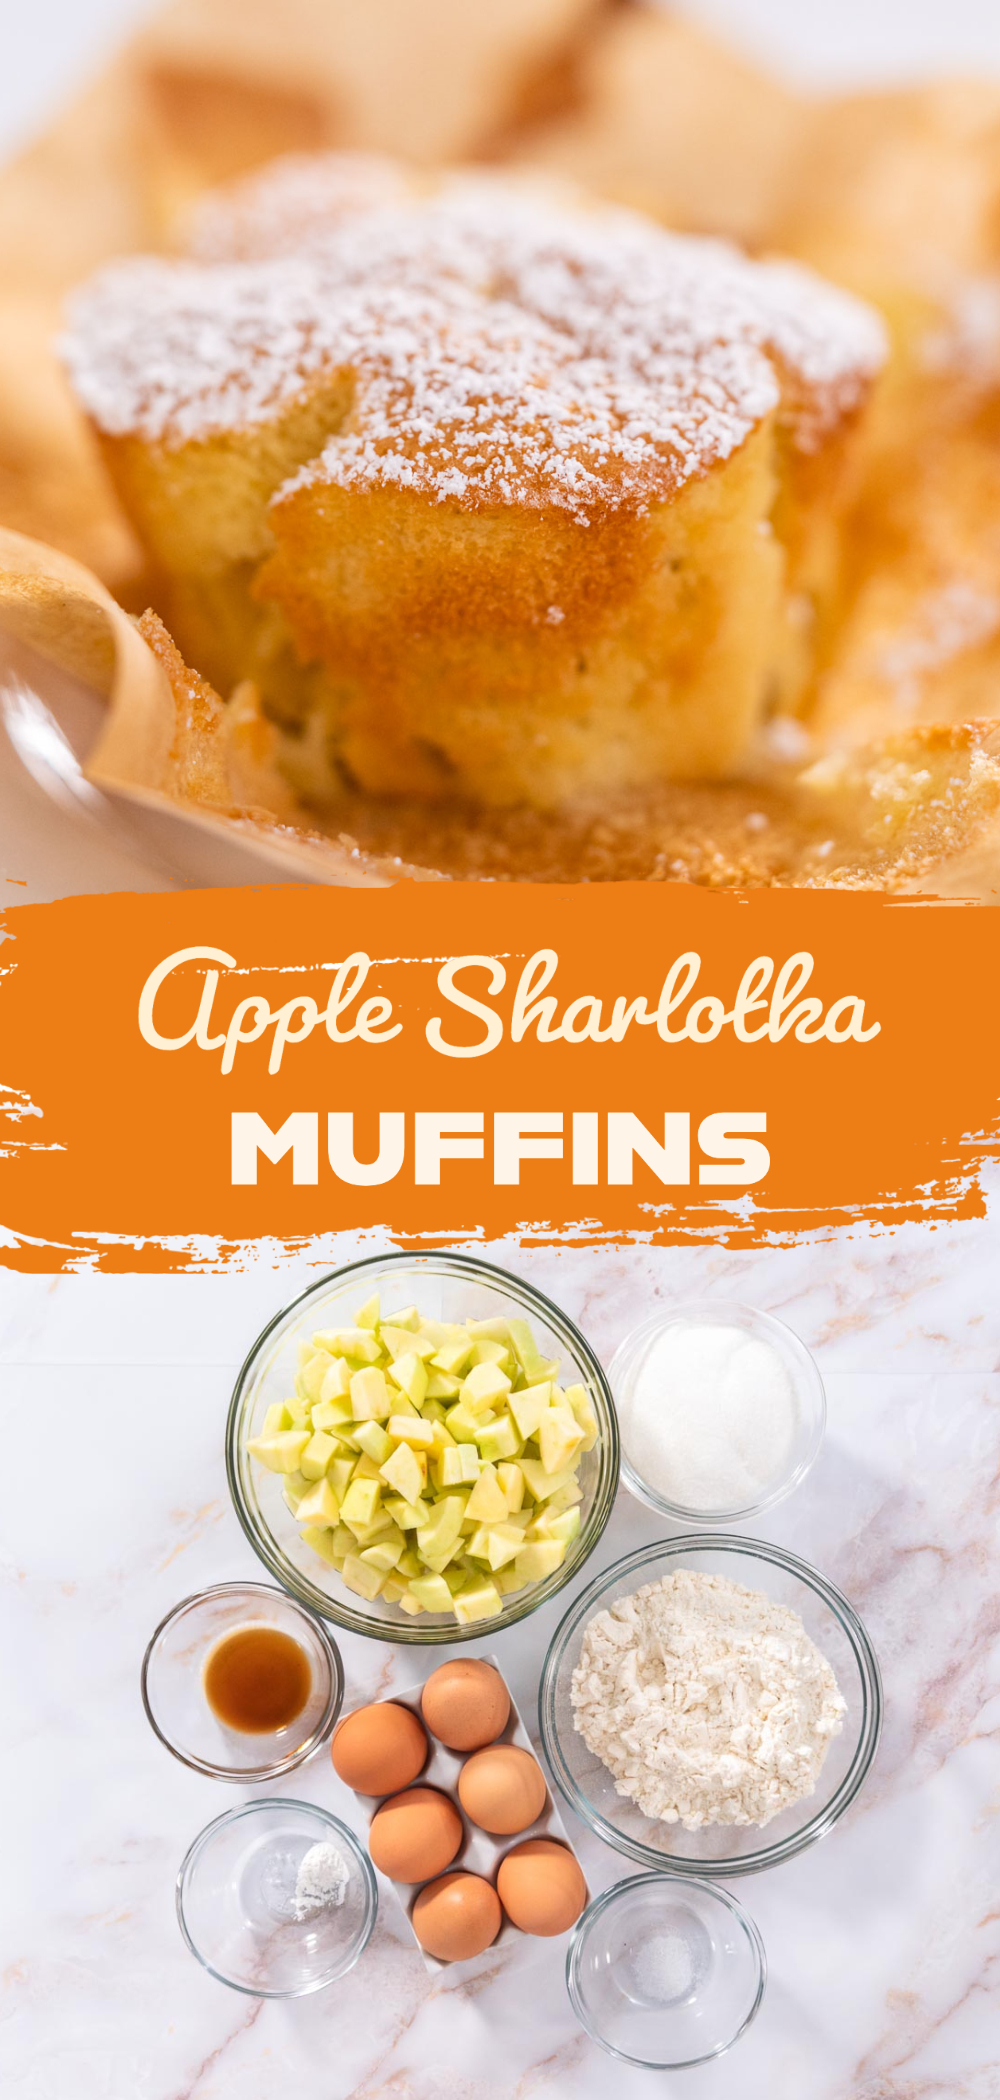 Apple Sharlotka muffins